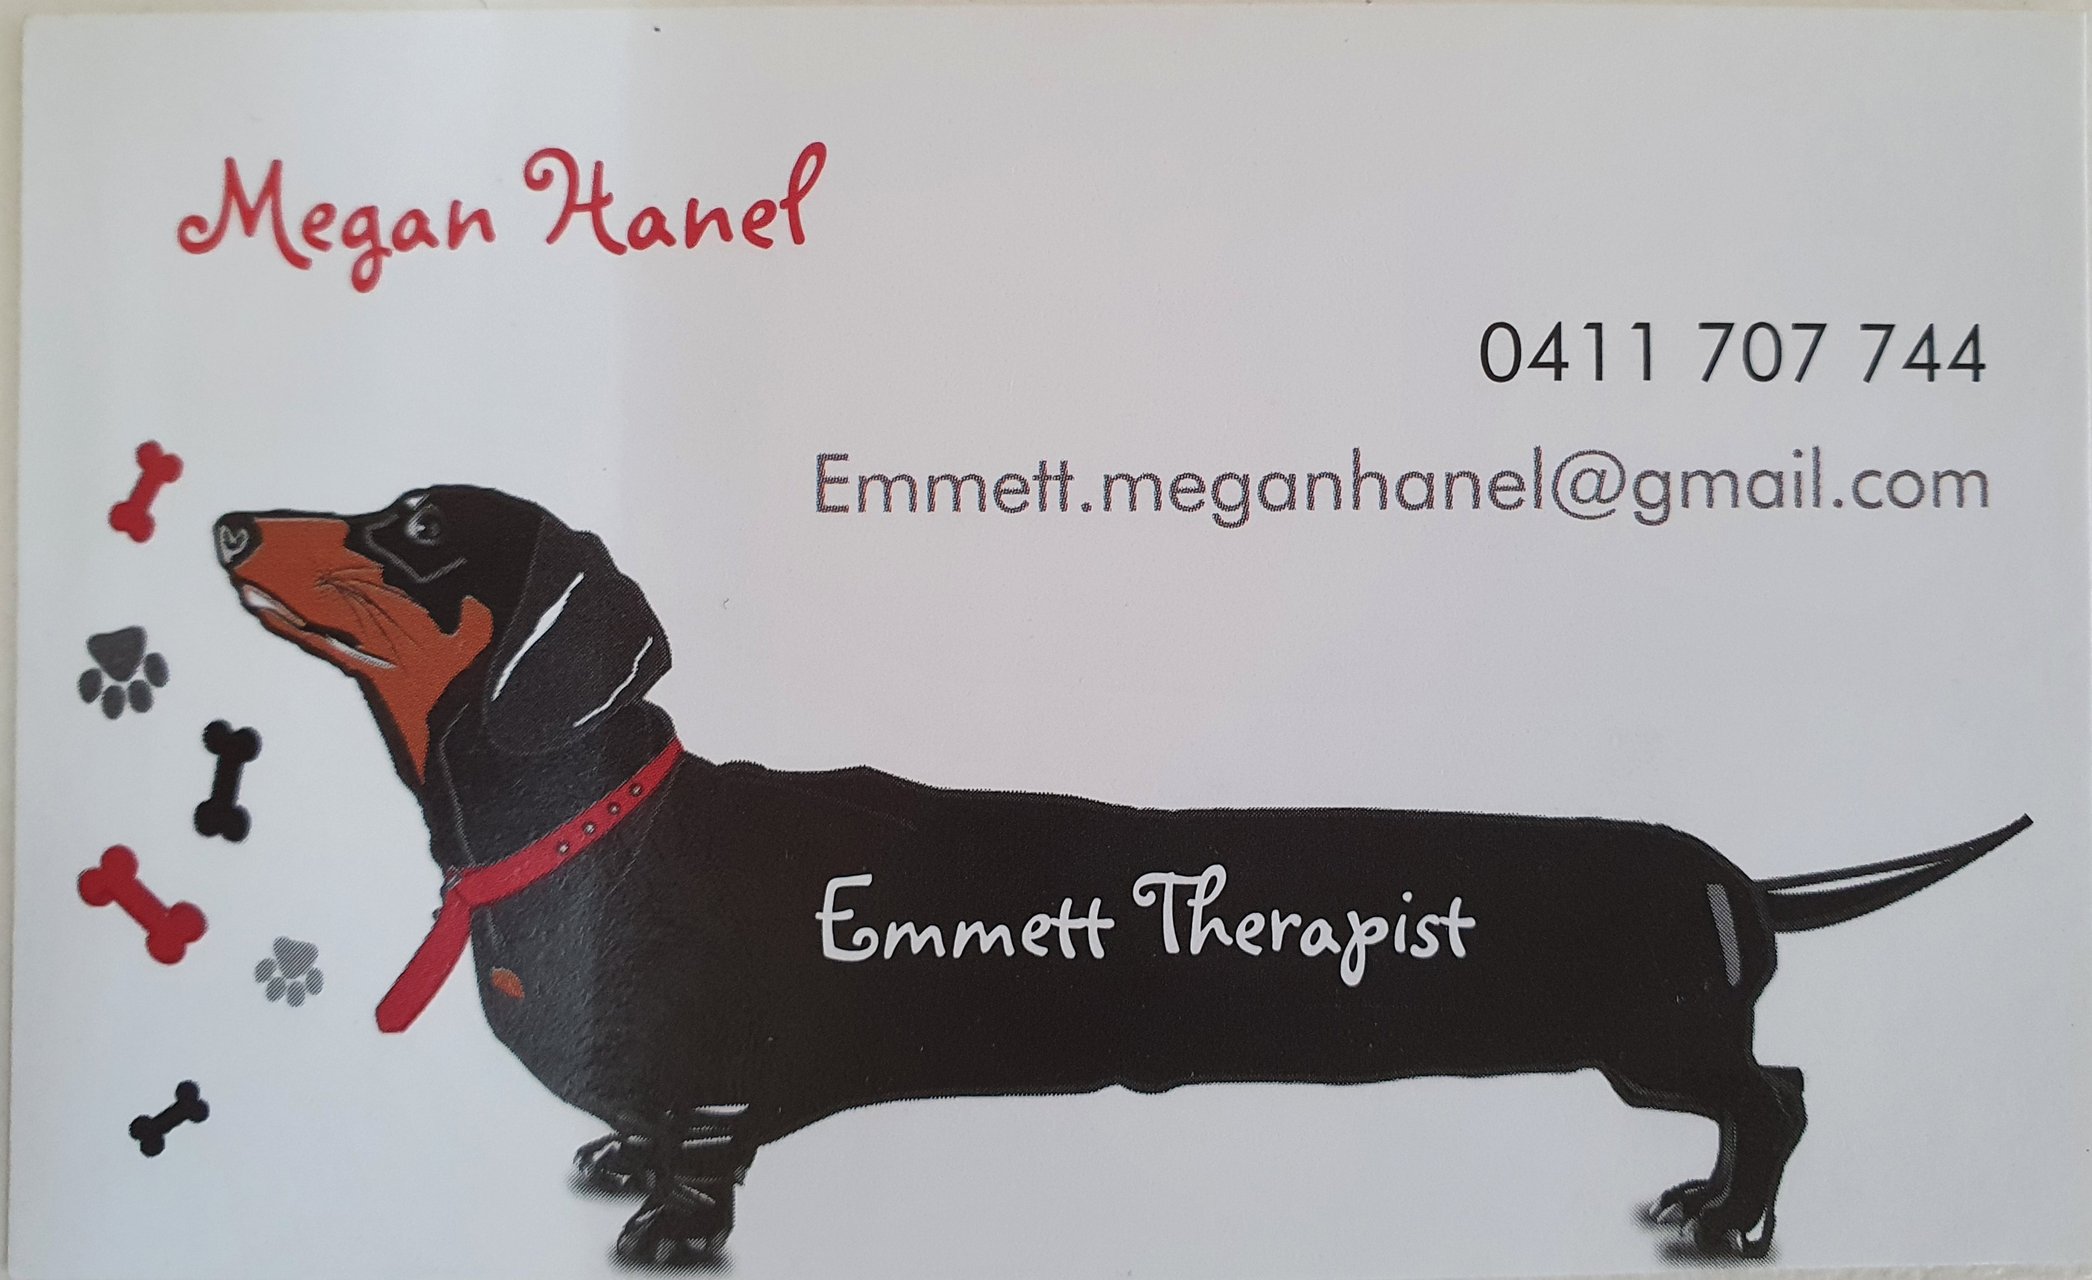 Emmett Therapist